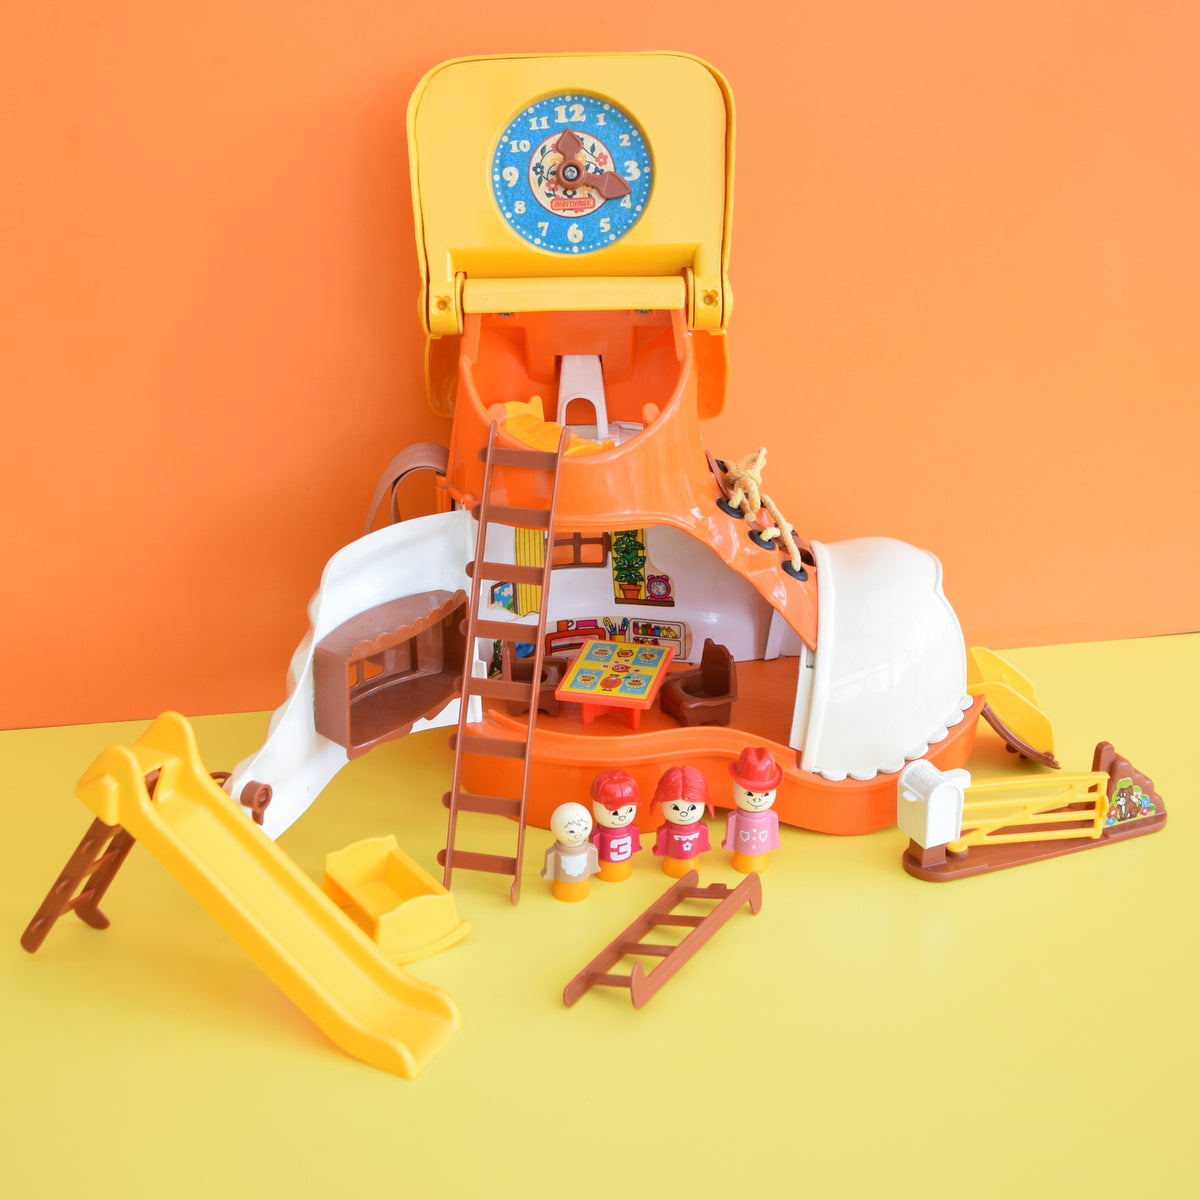 Vintage 1970s kitsch Plastic Matchbox Shoe House Toy - Orange 1